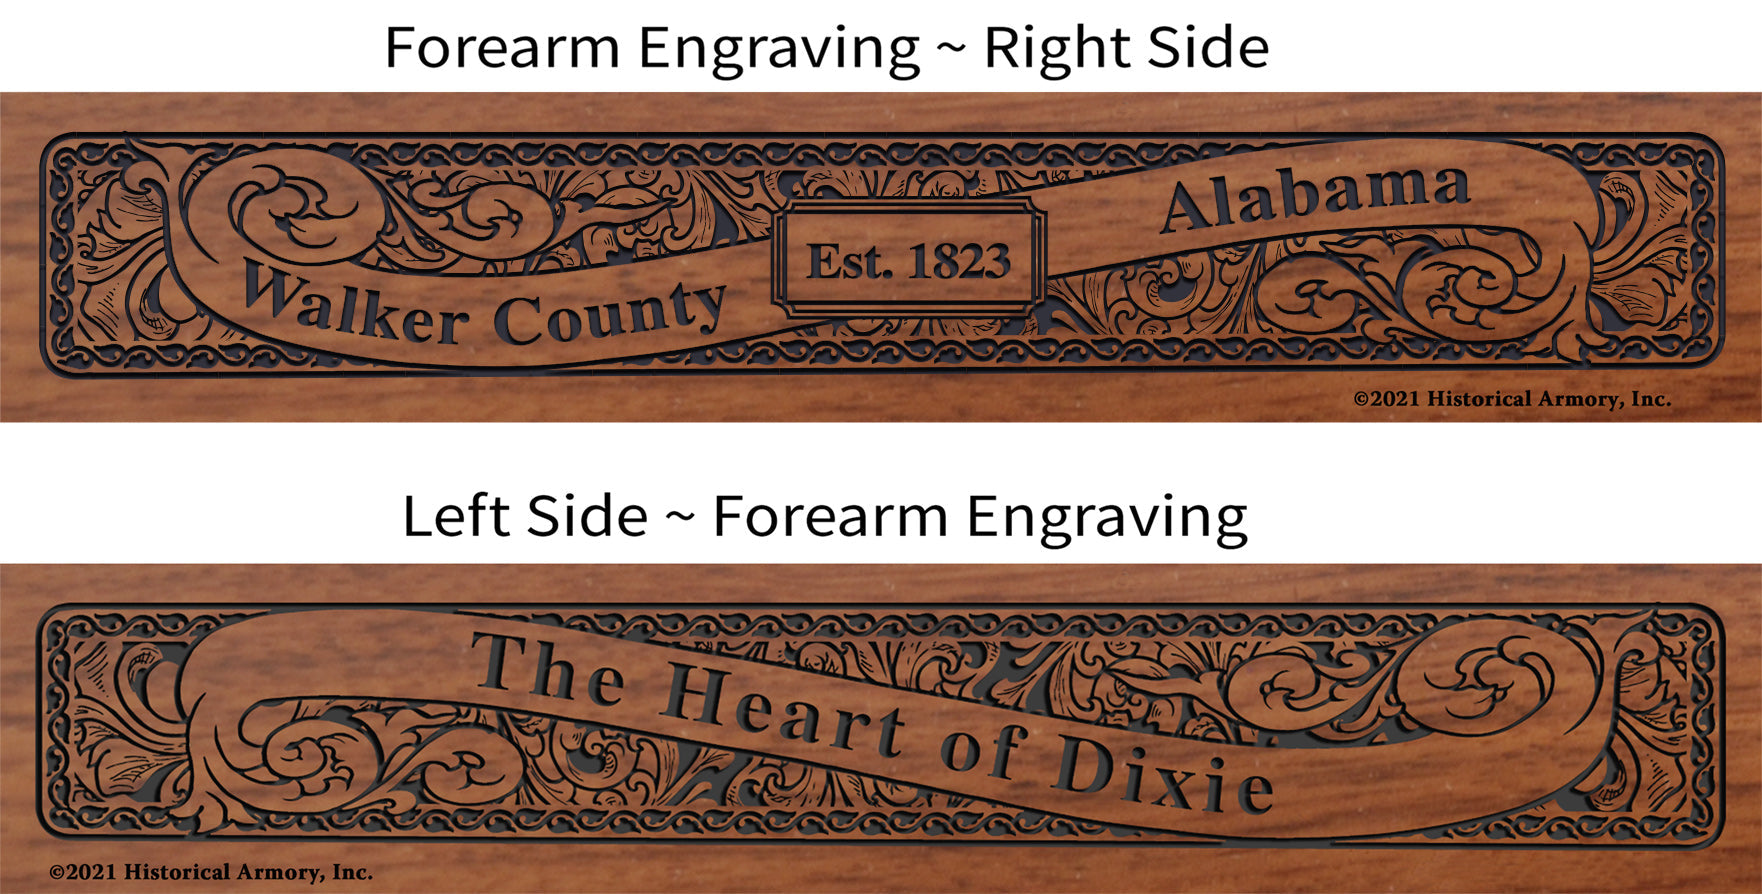 Walker County Alabama Establishment and Motto History Engraved Rifle Forearm